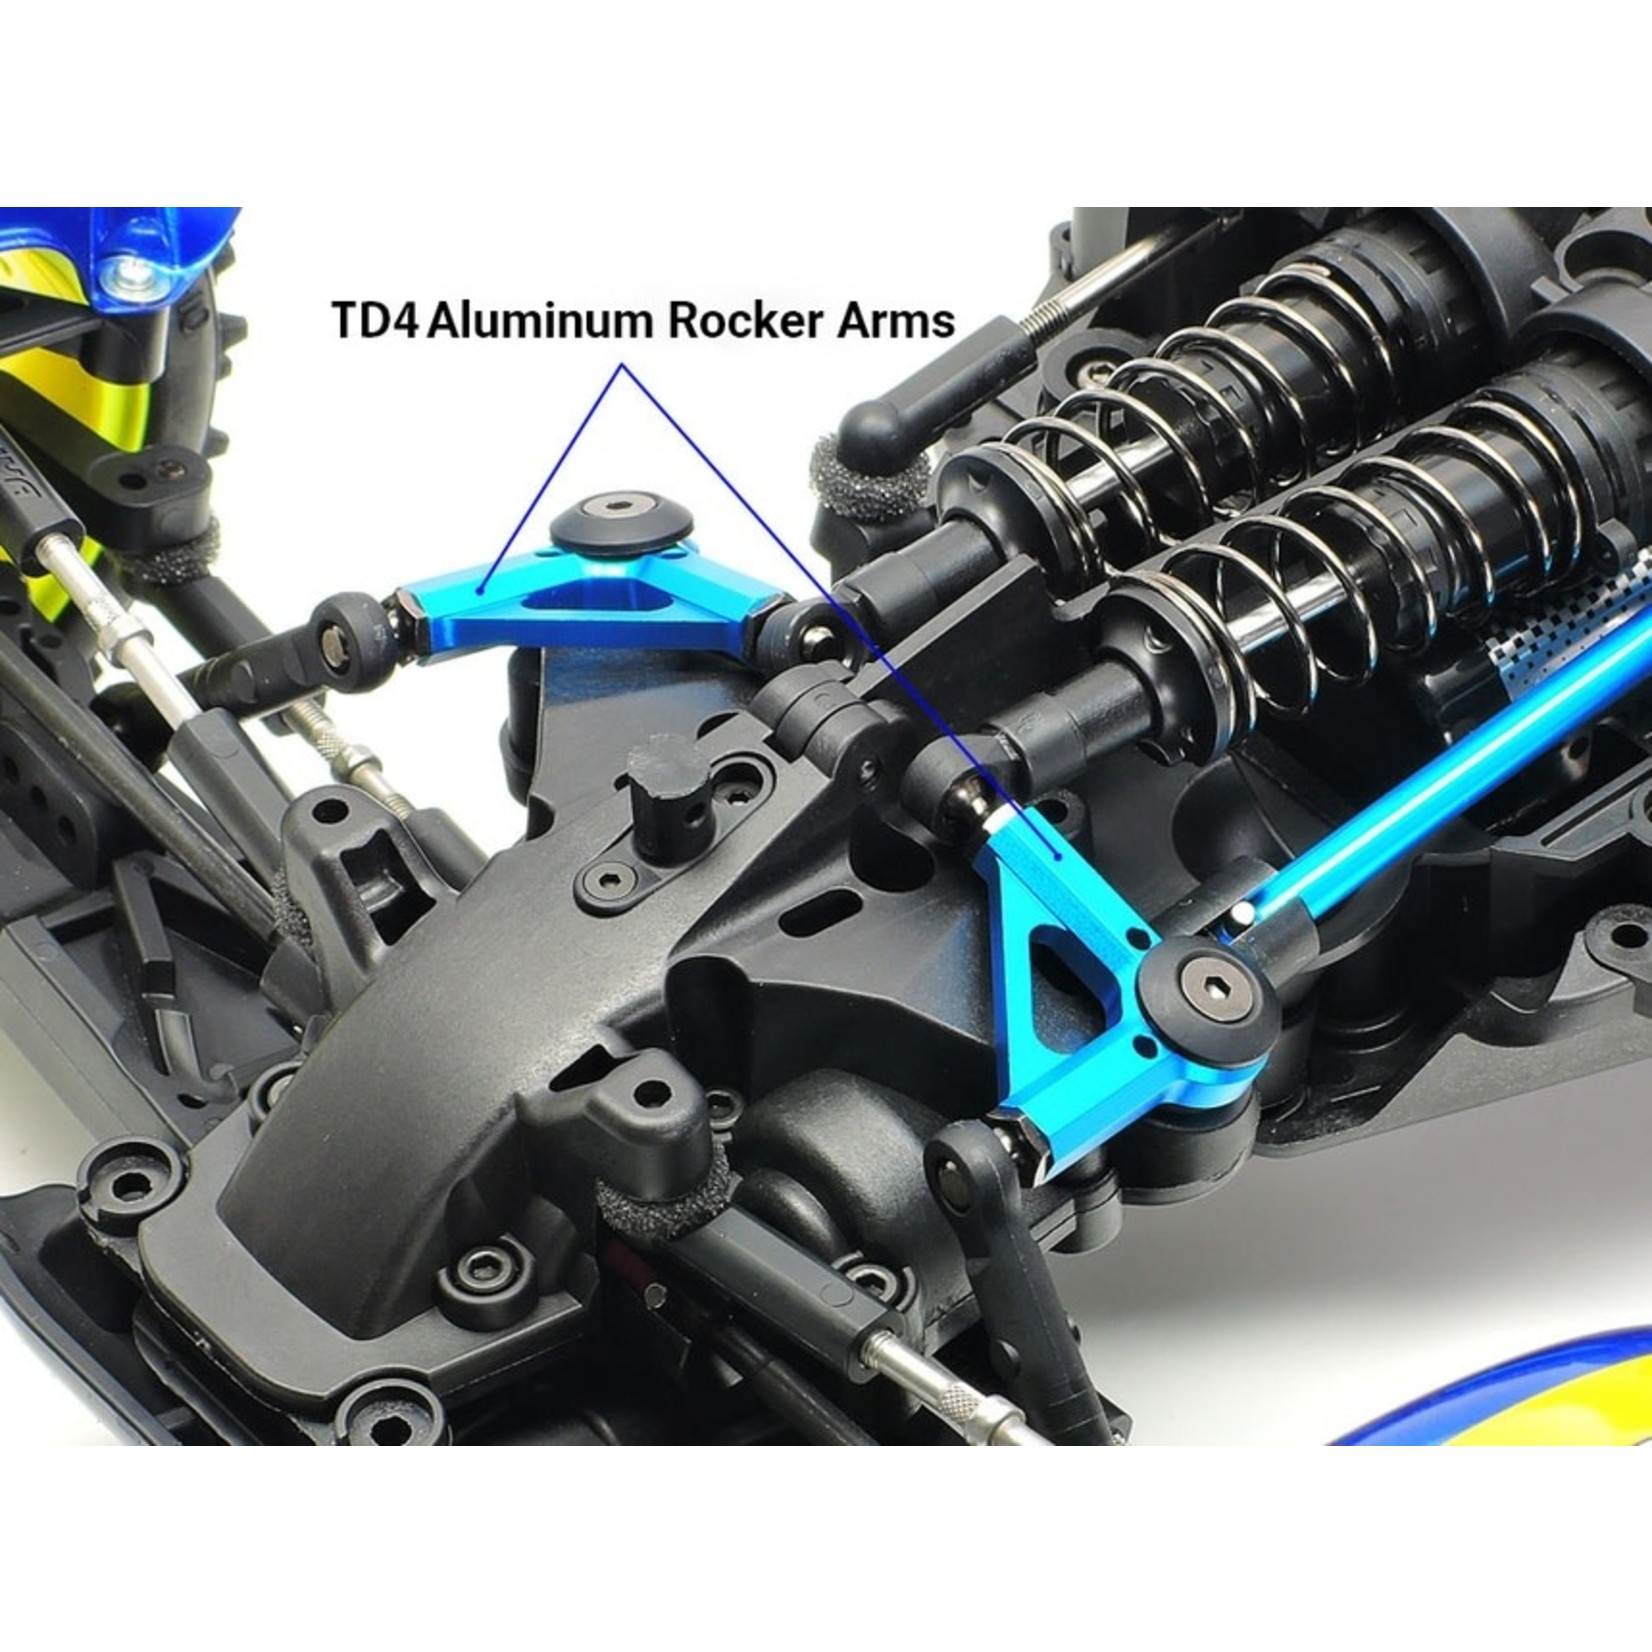 Tamiya Tamiya 22036 RC TD4 Aluminum Rocker Arms